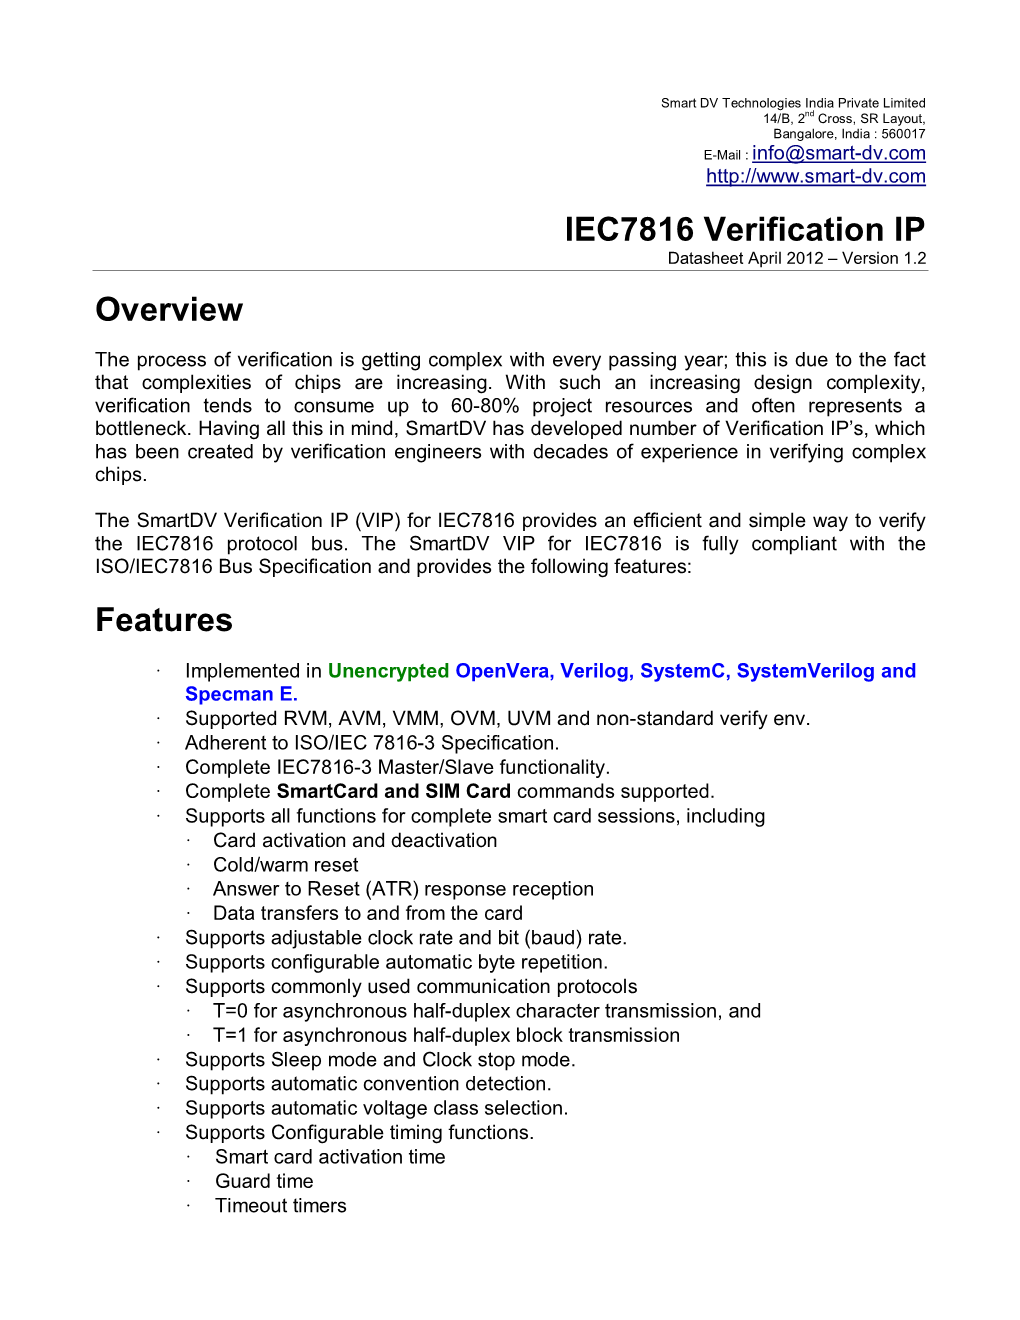 IEC7816 Verification IP Overview Features